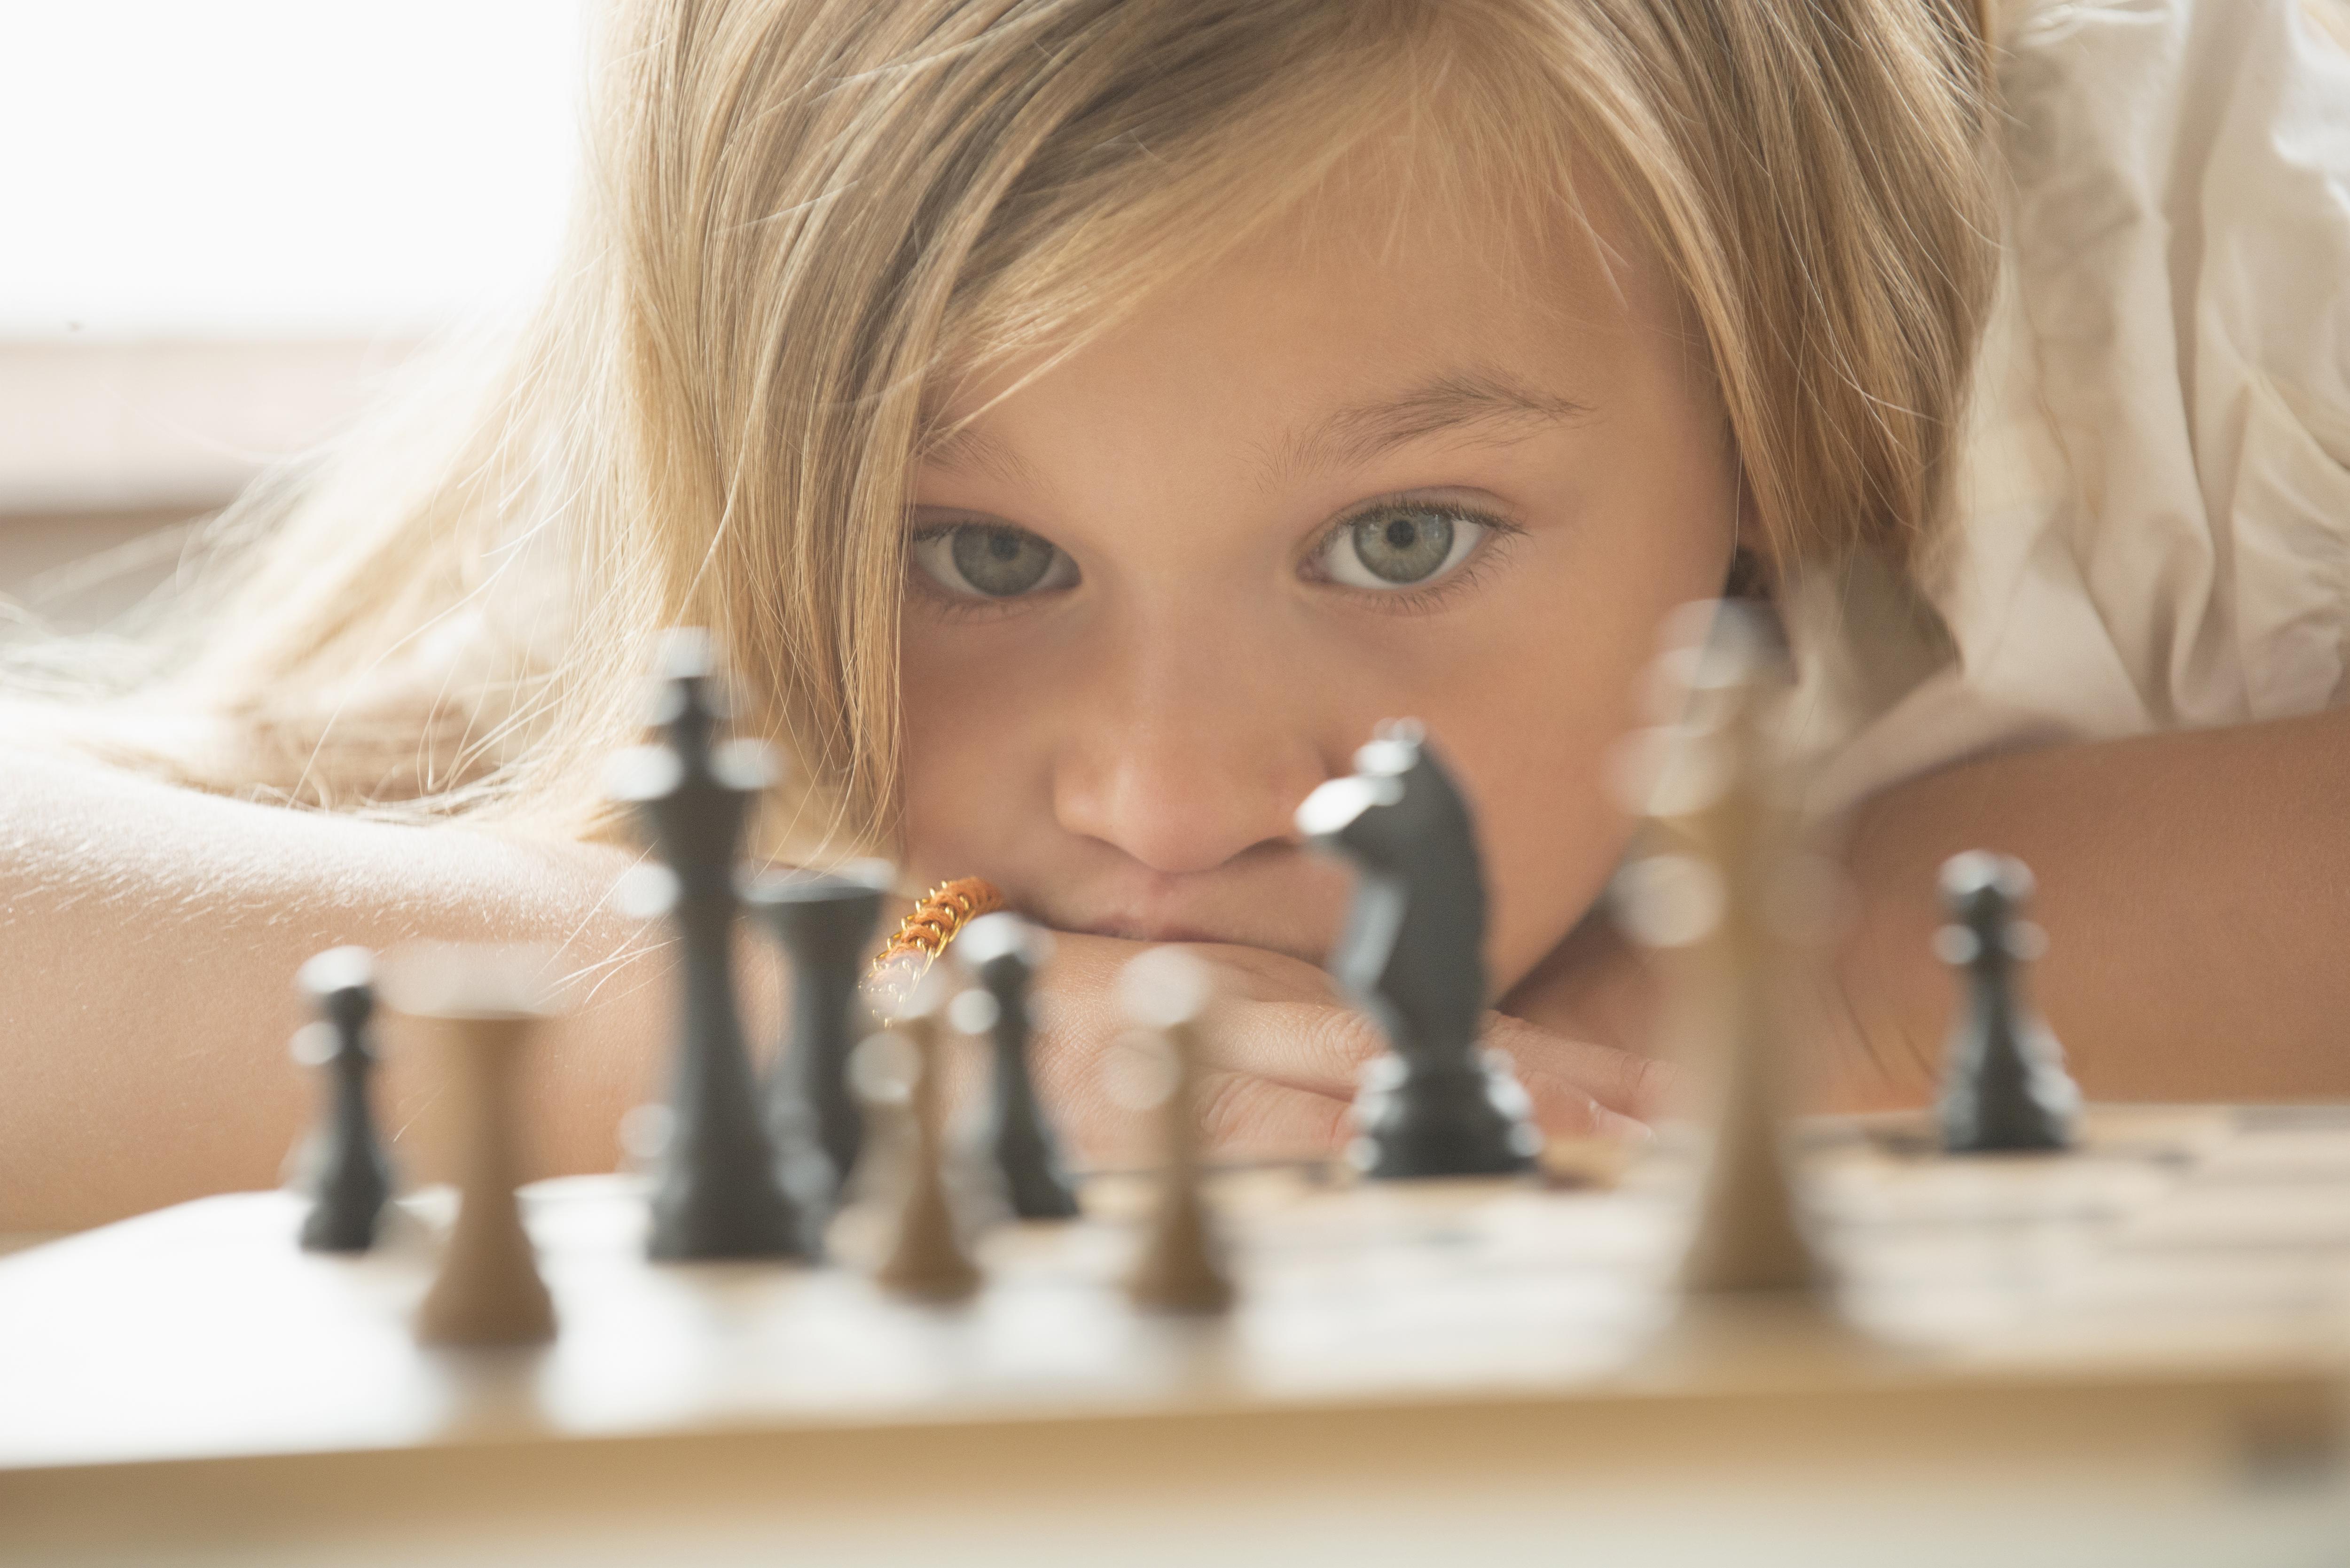 шахматы, шахматы для детей, шахматы для детей обучение, навыки, которые дают шахматы детям, раннее развитие, с какого возраста обучать шахматам